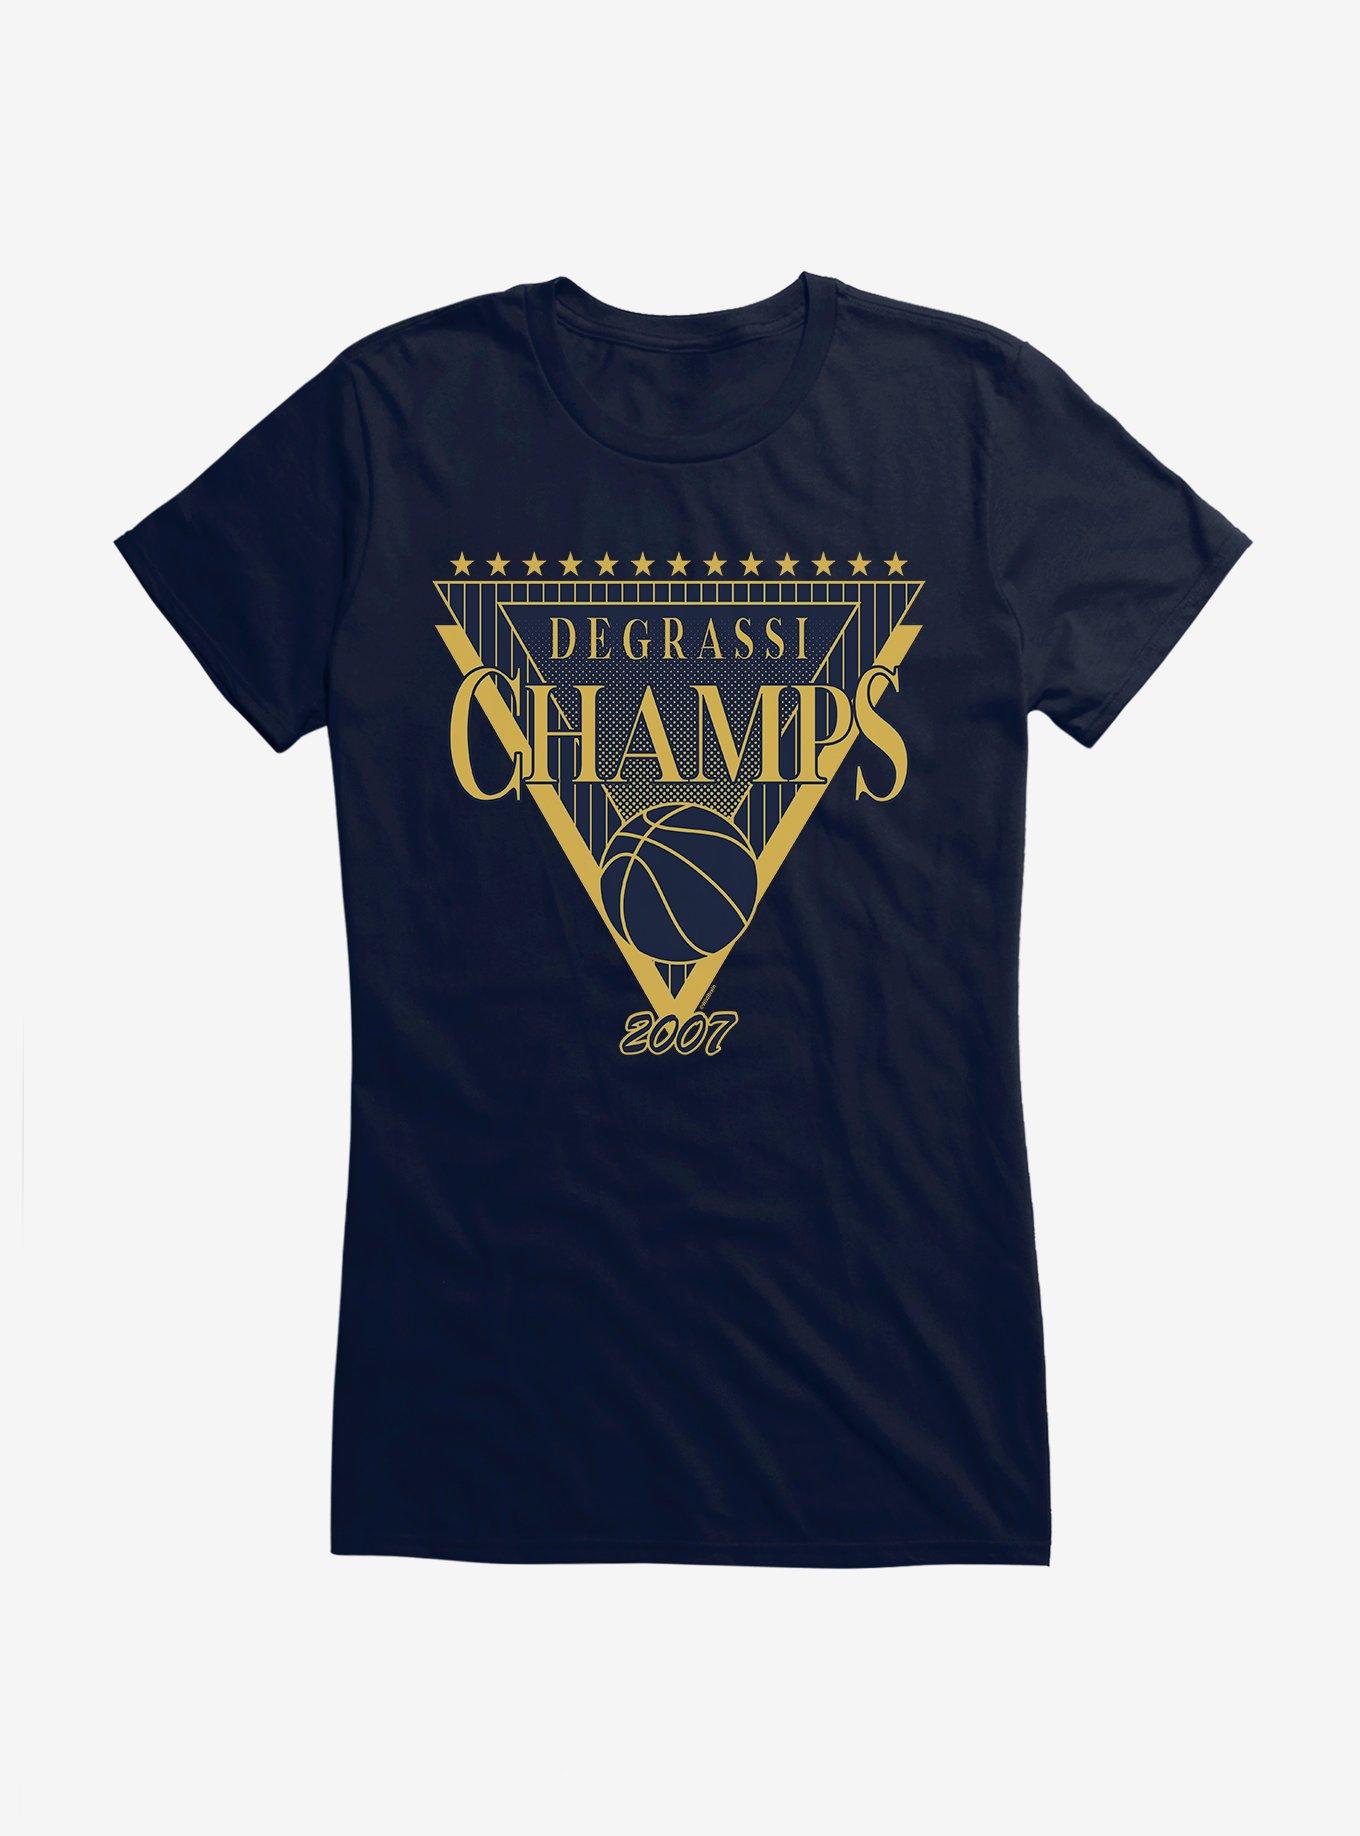 Degrassi: The Next Generation Degrassi 2007 Basketball Champs Girls T-Shirt